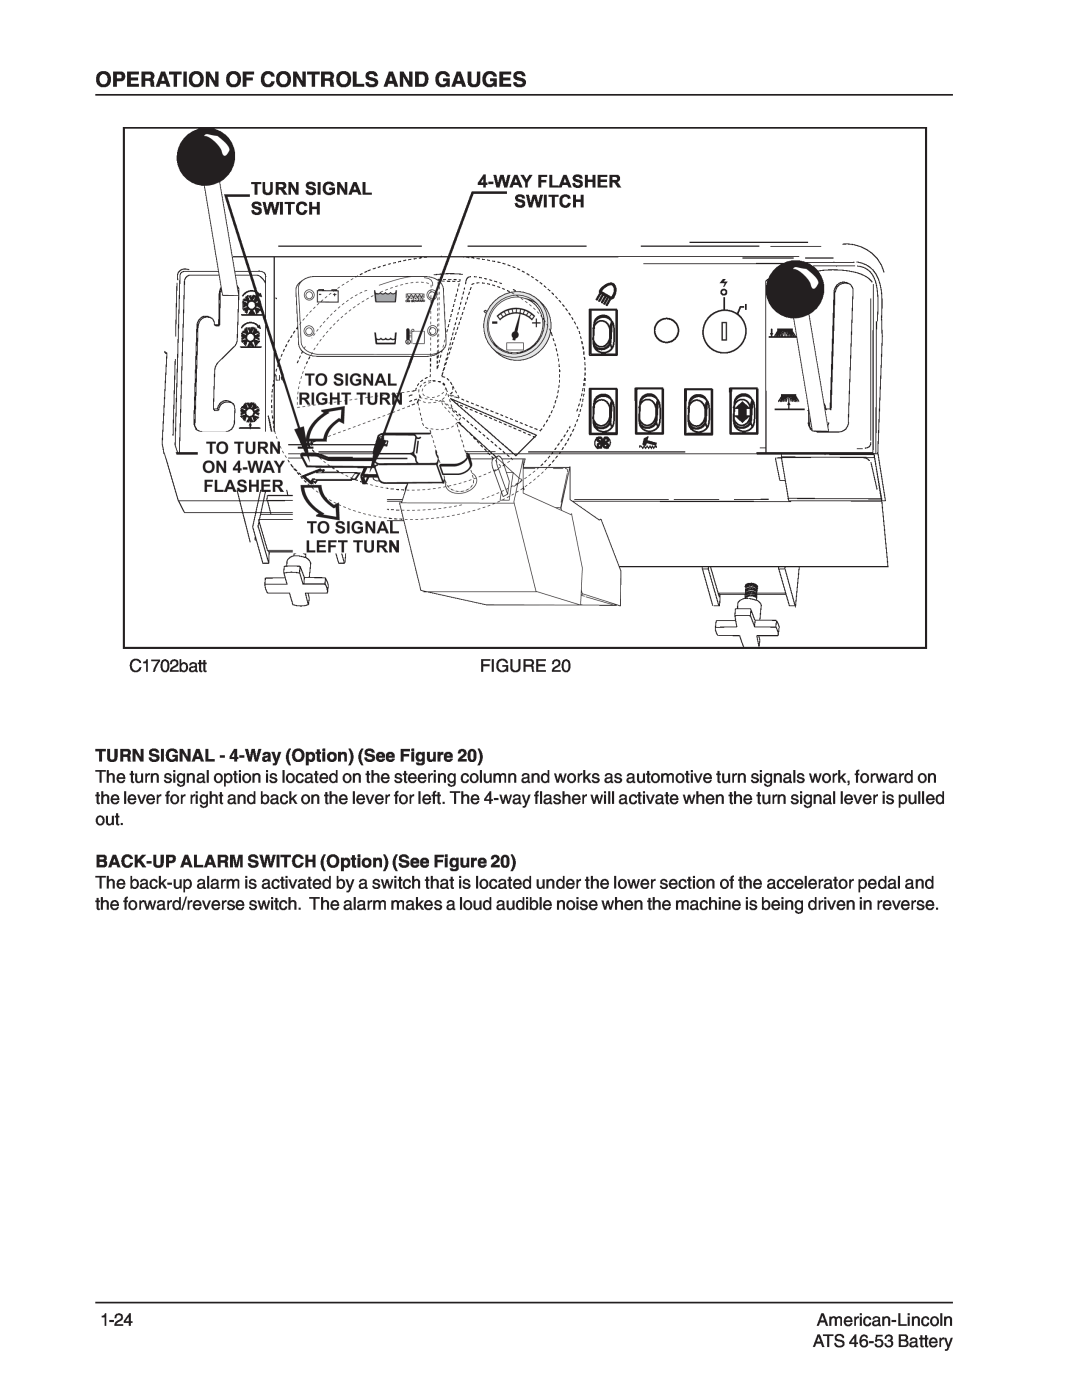 Nilfisk-ALTO 46/53 manual Turn Signal, Wayflasher, Switch, Right Turn, To Turn, Flasher, Left Turn, C1702batt 